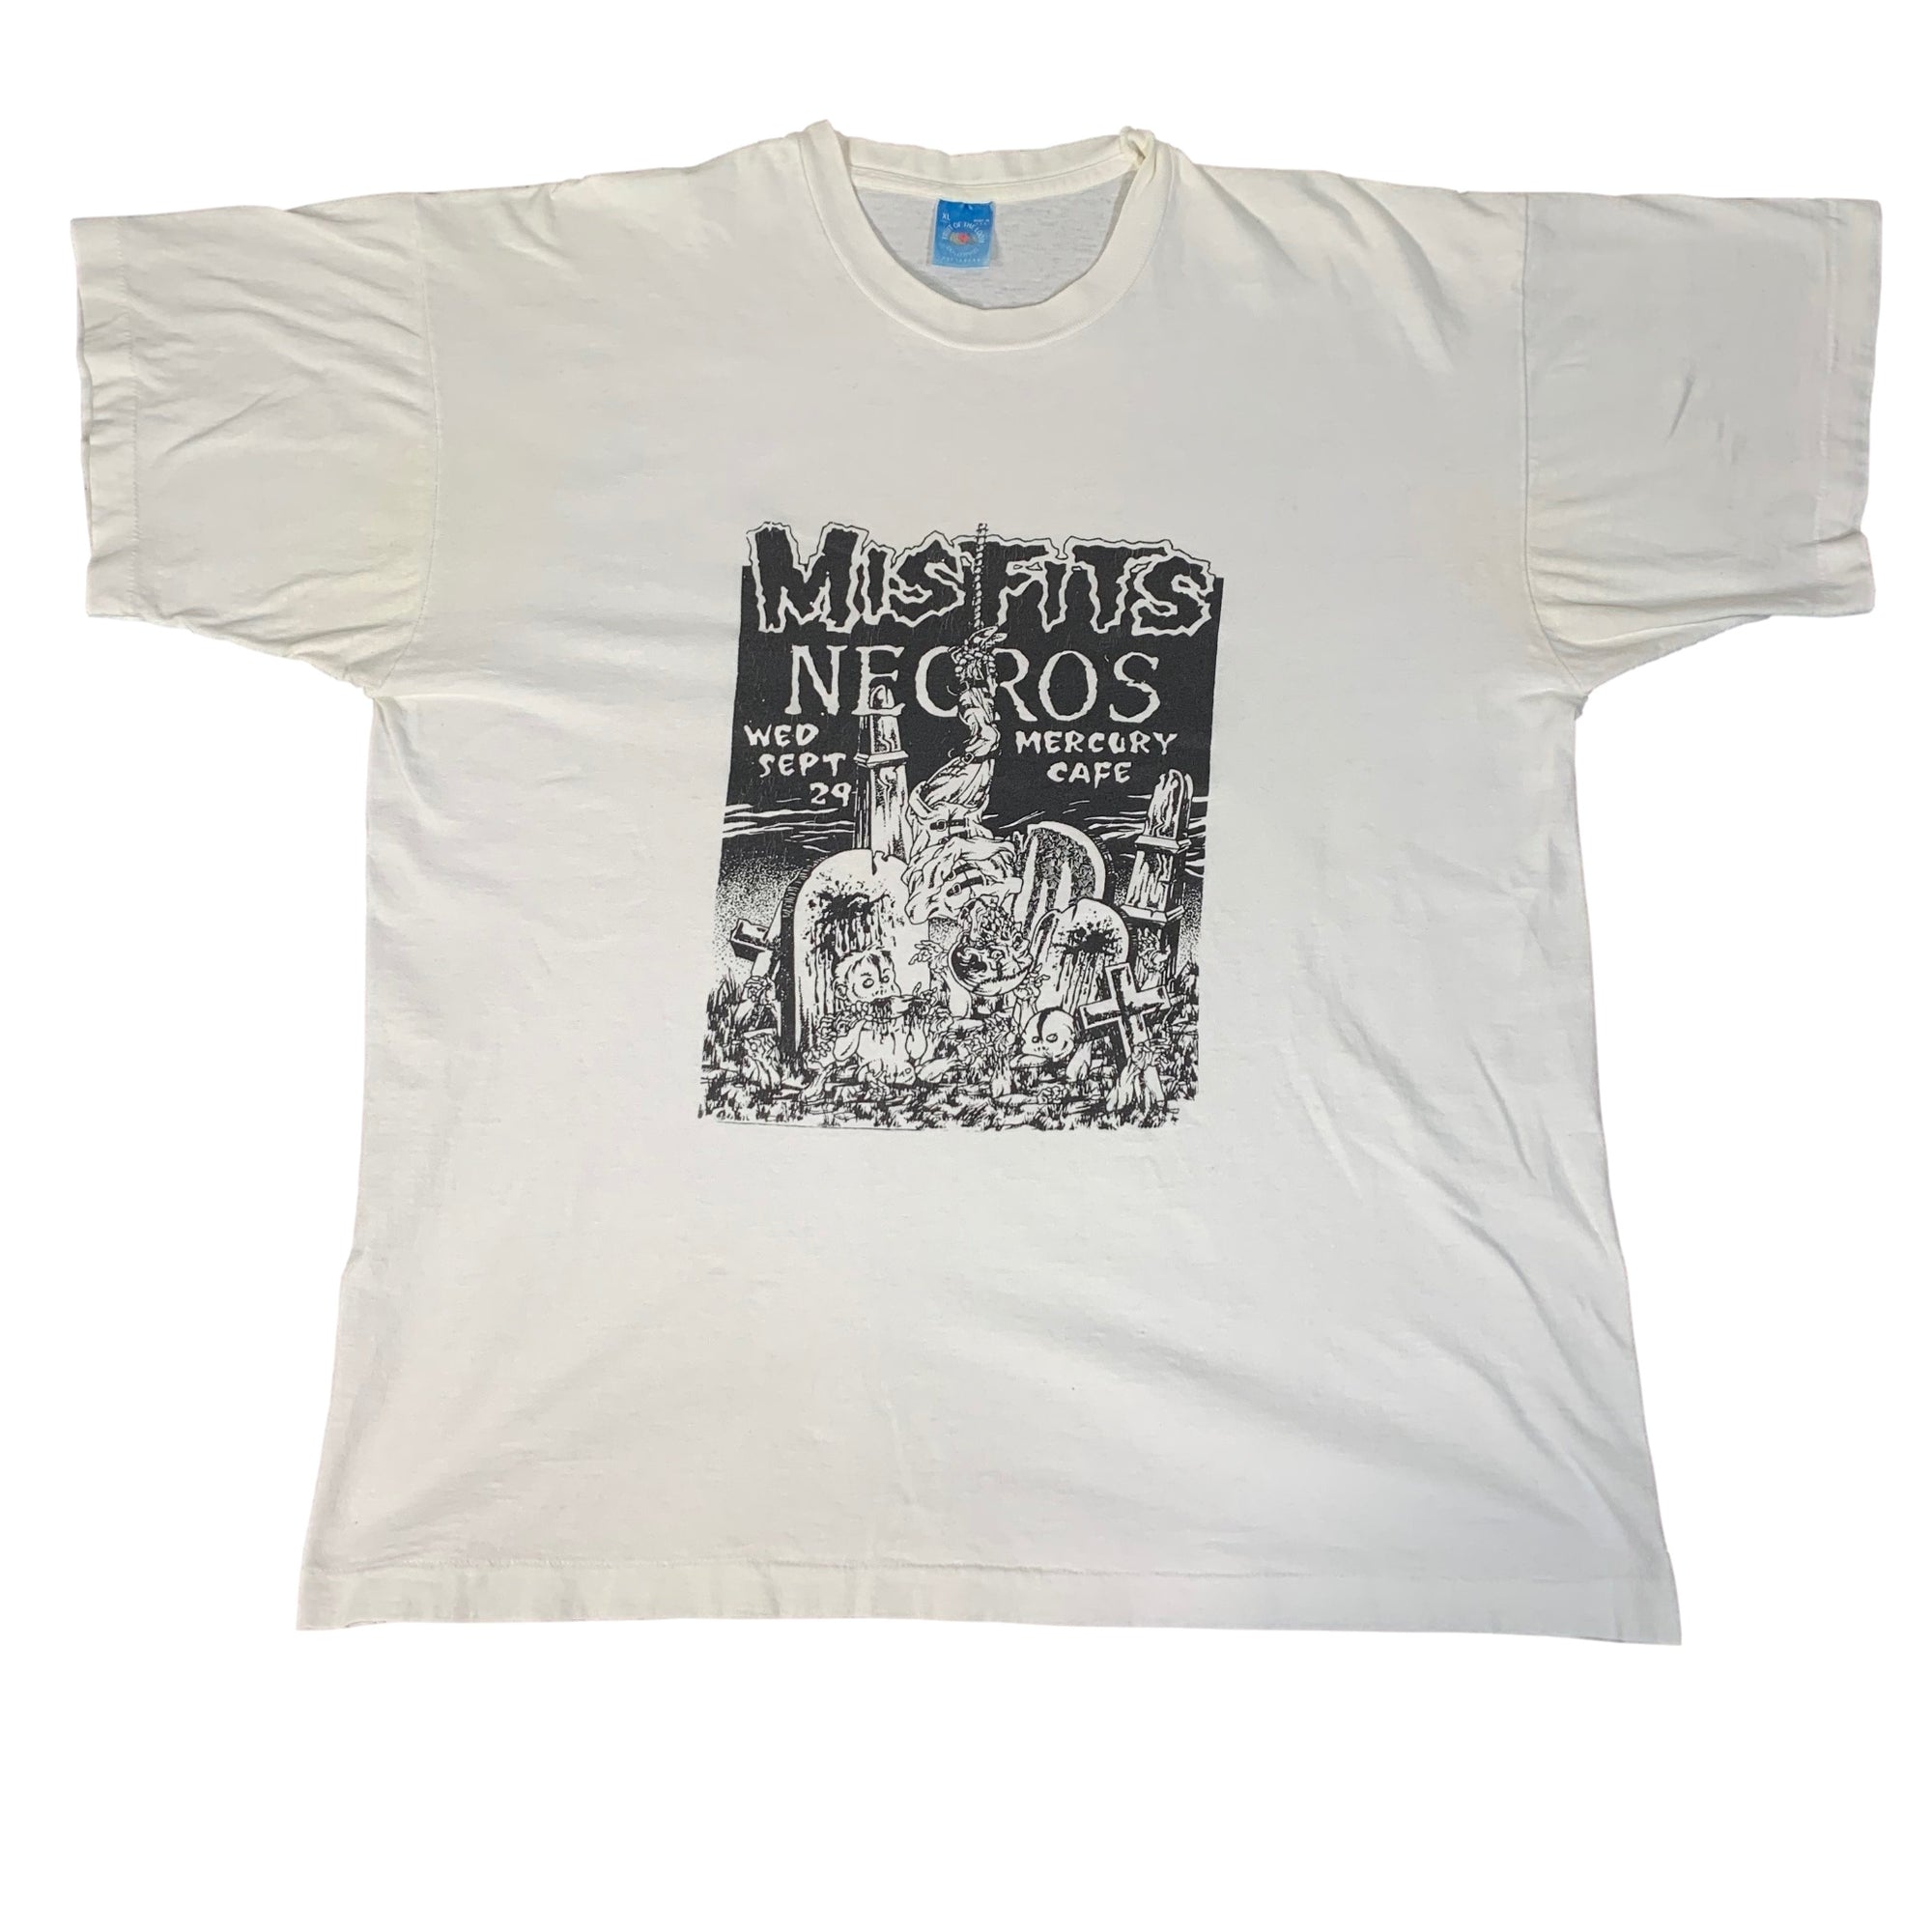 Vintage Misfits Necros "Mercury Cafe" T-Shirt - jointcustodydc